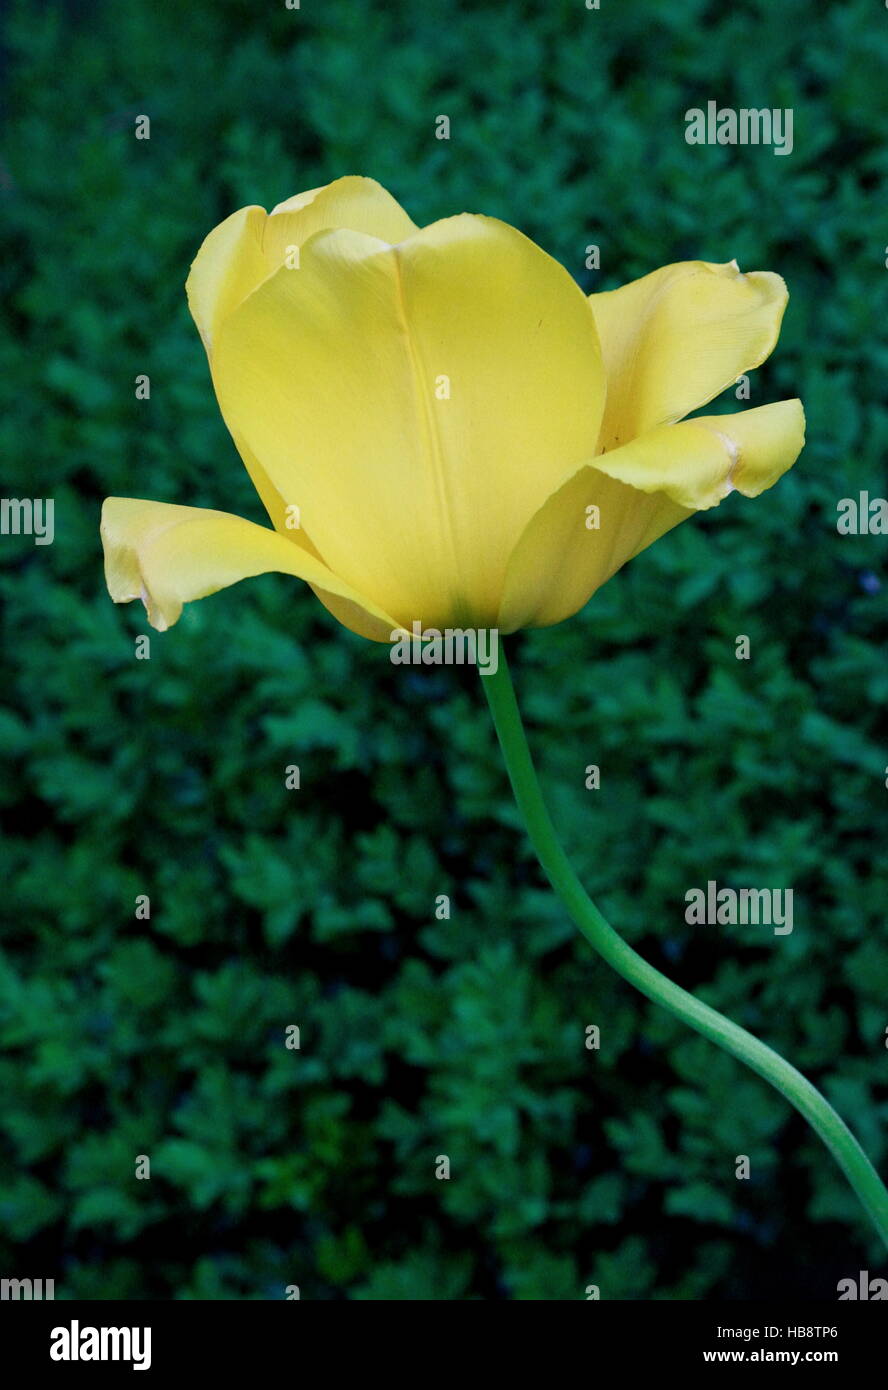 yellow tulip in its zenith Stock Photo